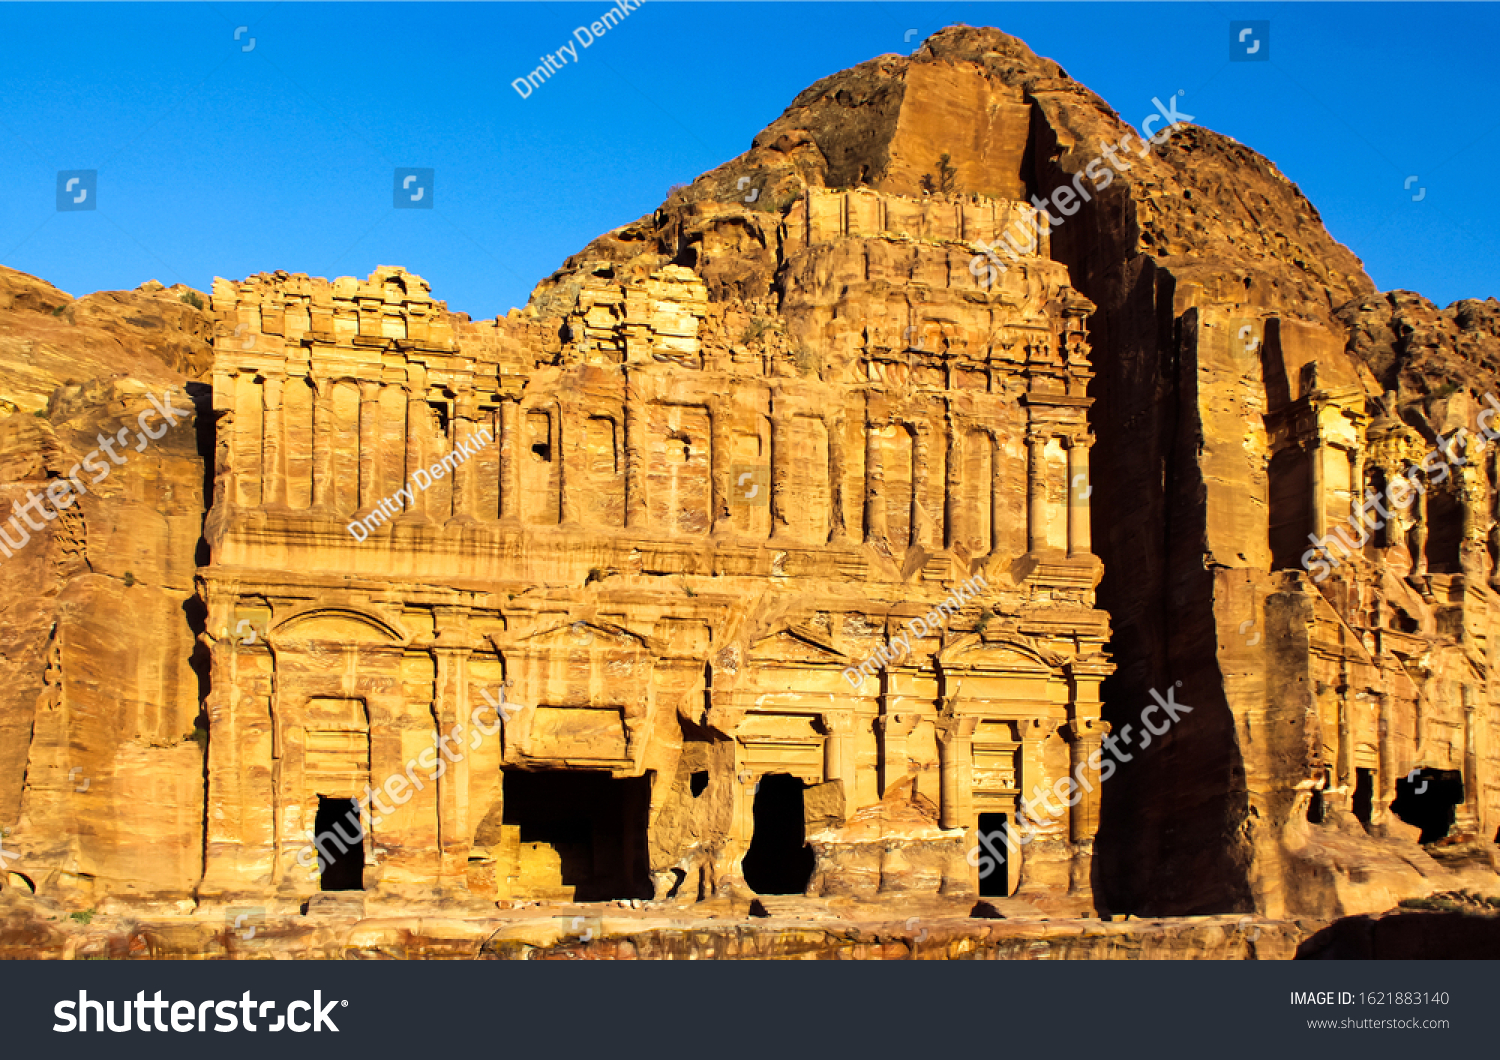 Ancient city of Petra in Jordan #1621883140